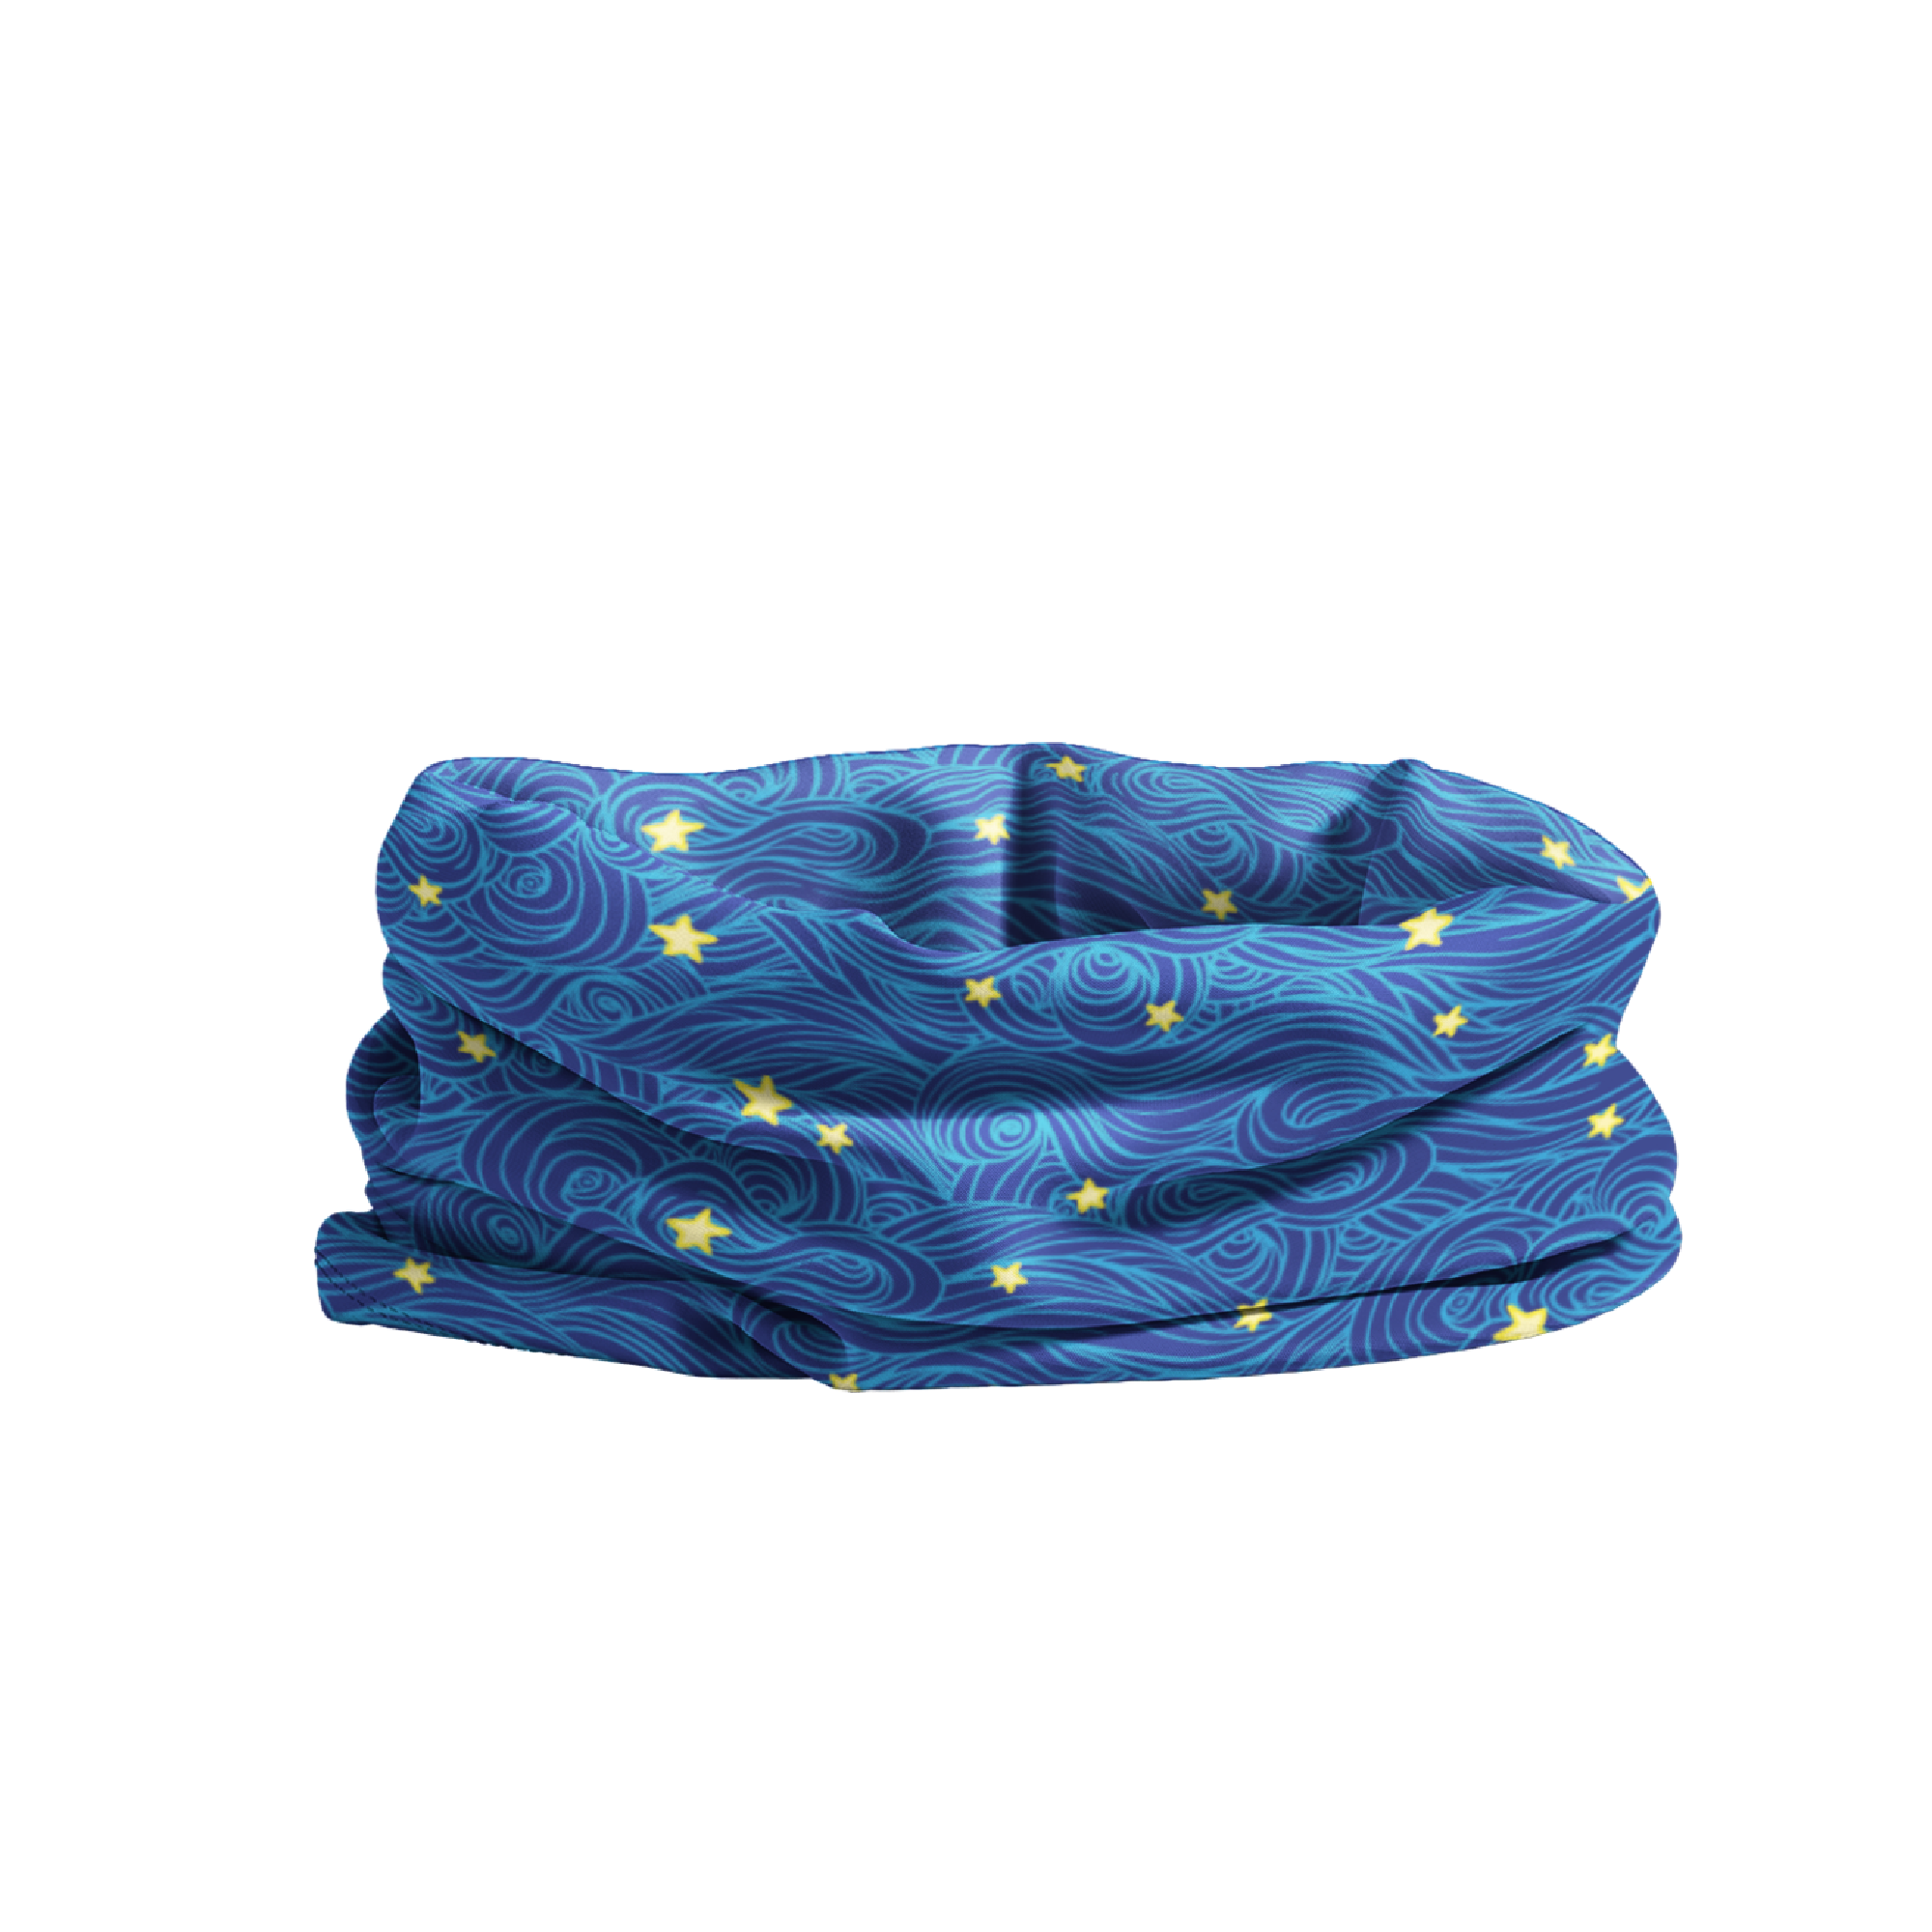 Lunabands Starry Starry Night Multi use Running Bandana Headband